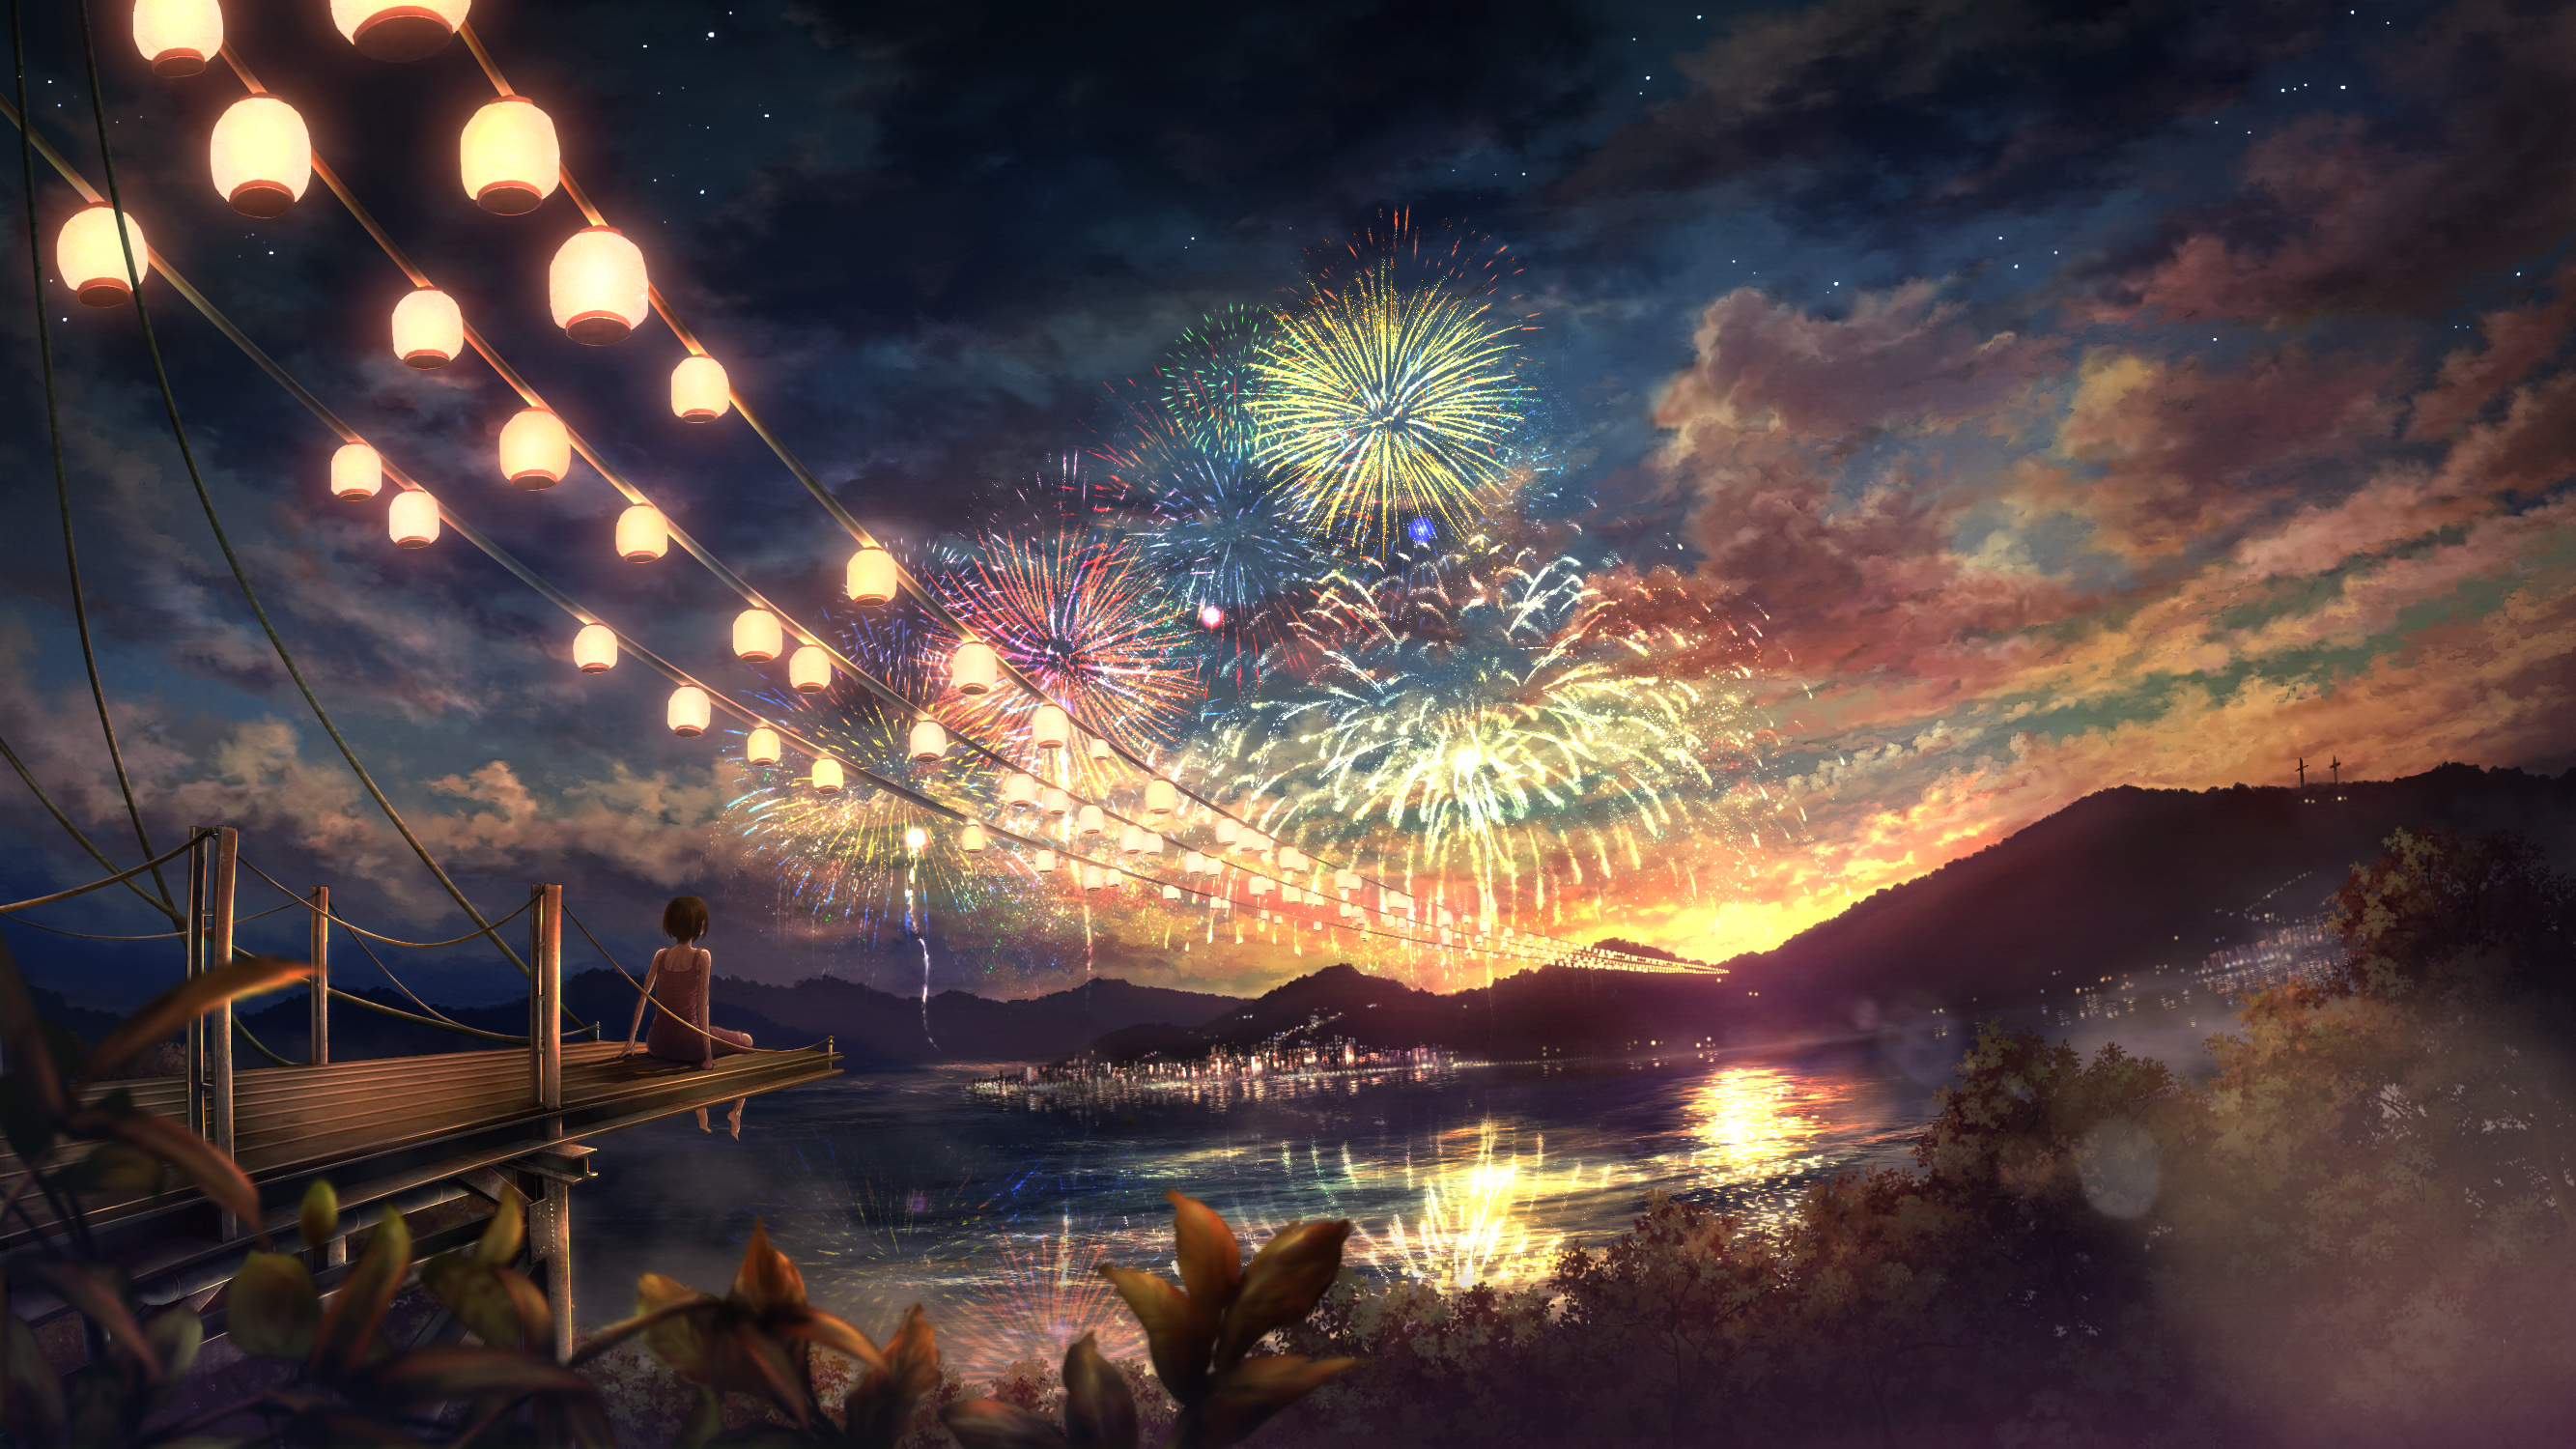 anime, colorful, reflection, lake, fireworks, festival, lantern, sunset